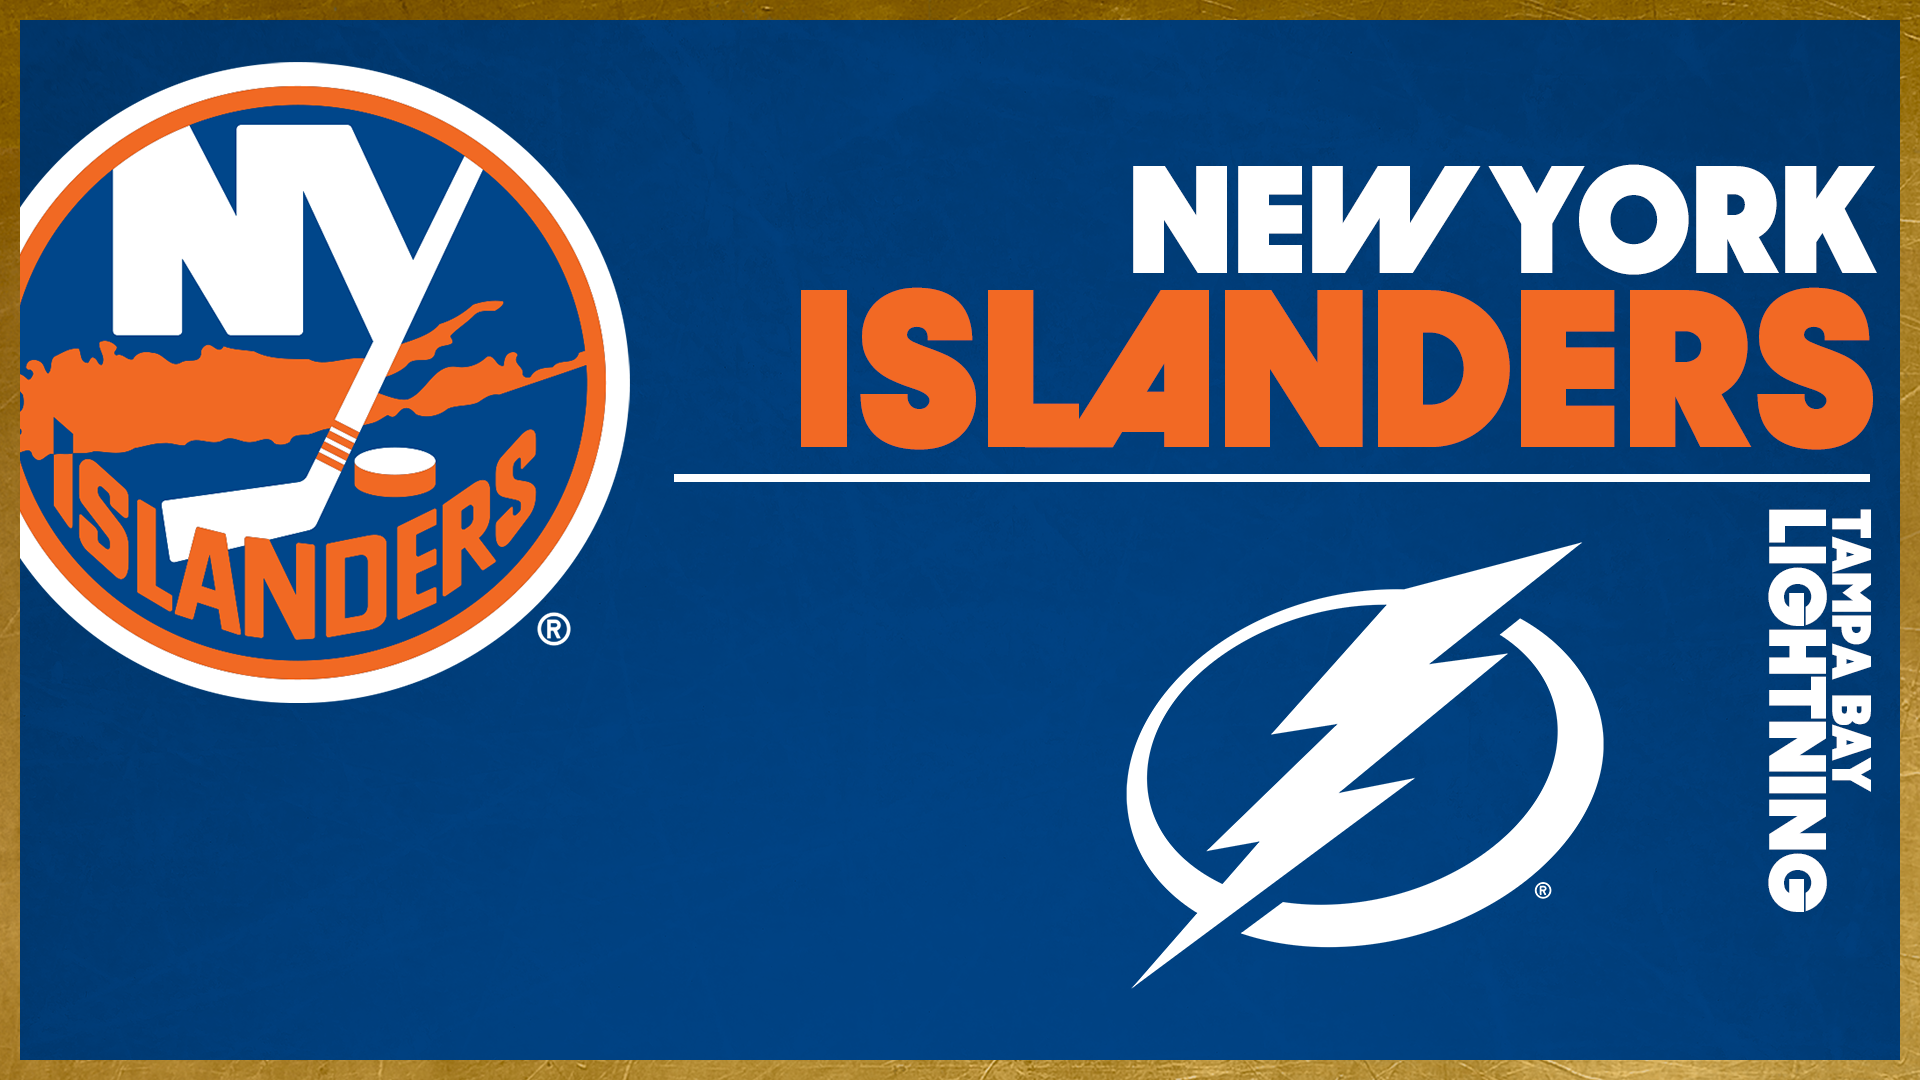 New York Islanders vs. Tampa Bay Lightning